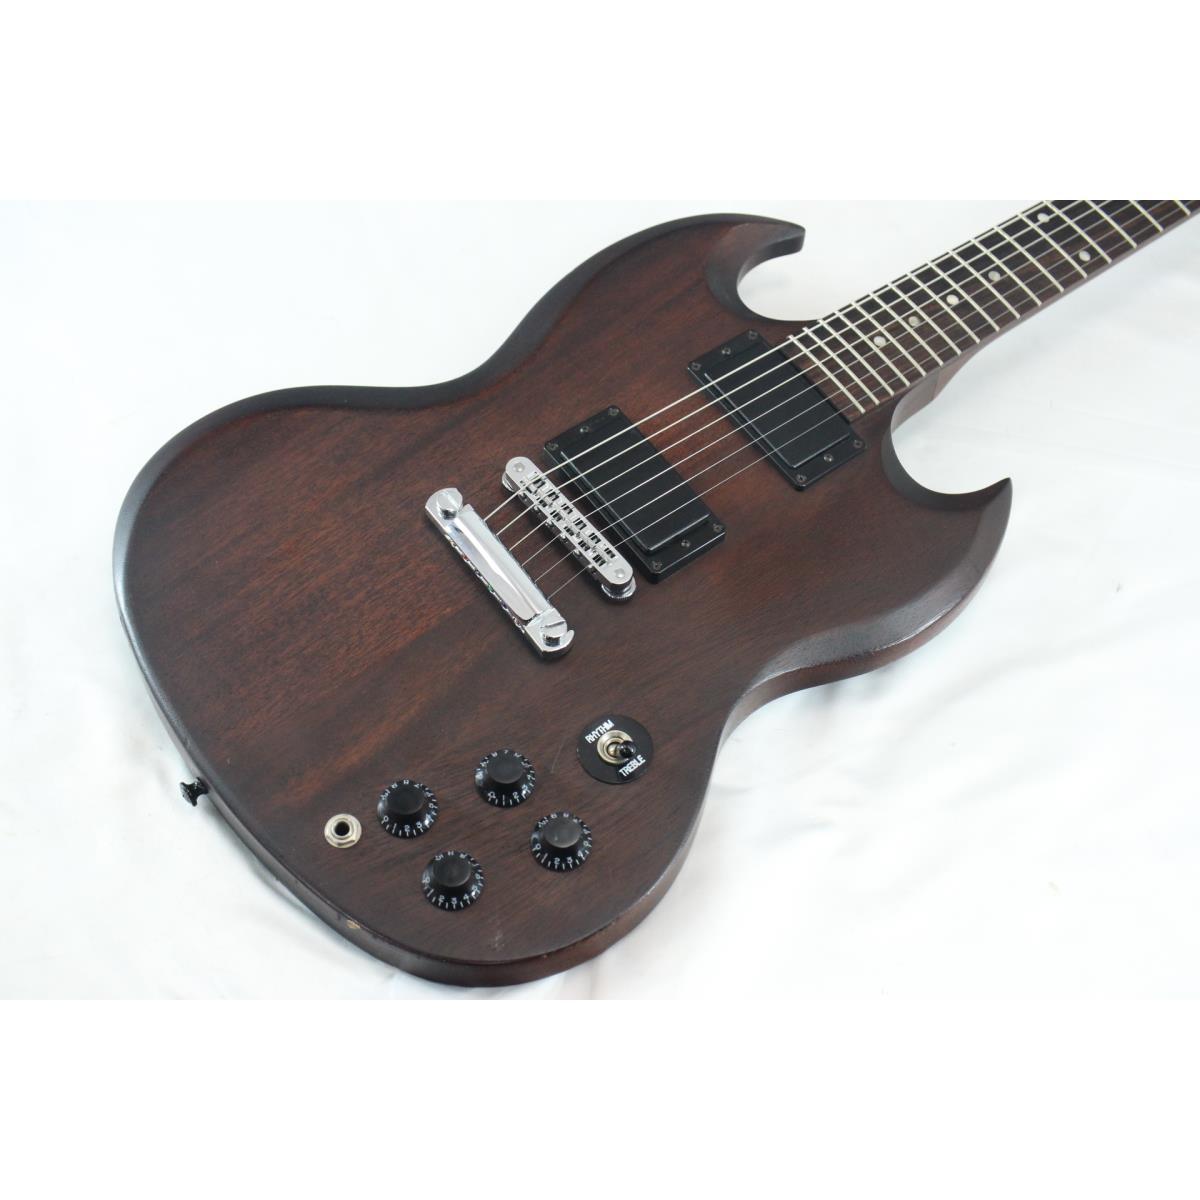 KOMEHYO|GIBSON SGJ|Gibson|Musical Instruments|Electric Guitar 